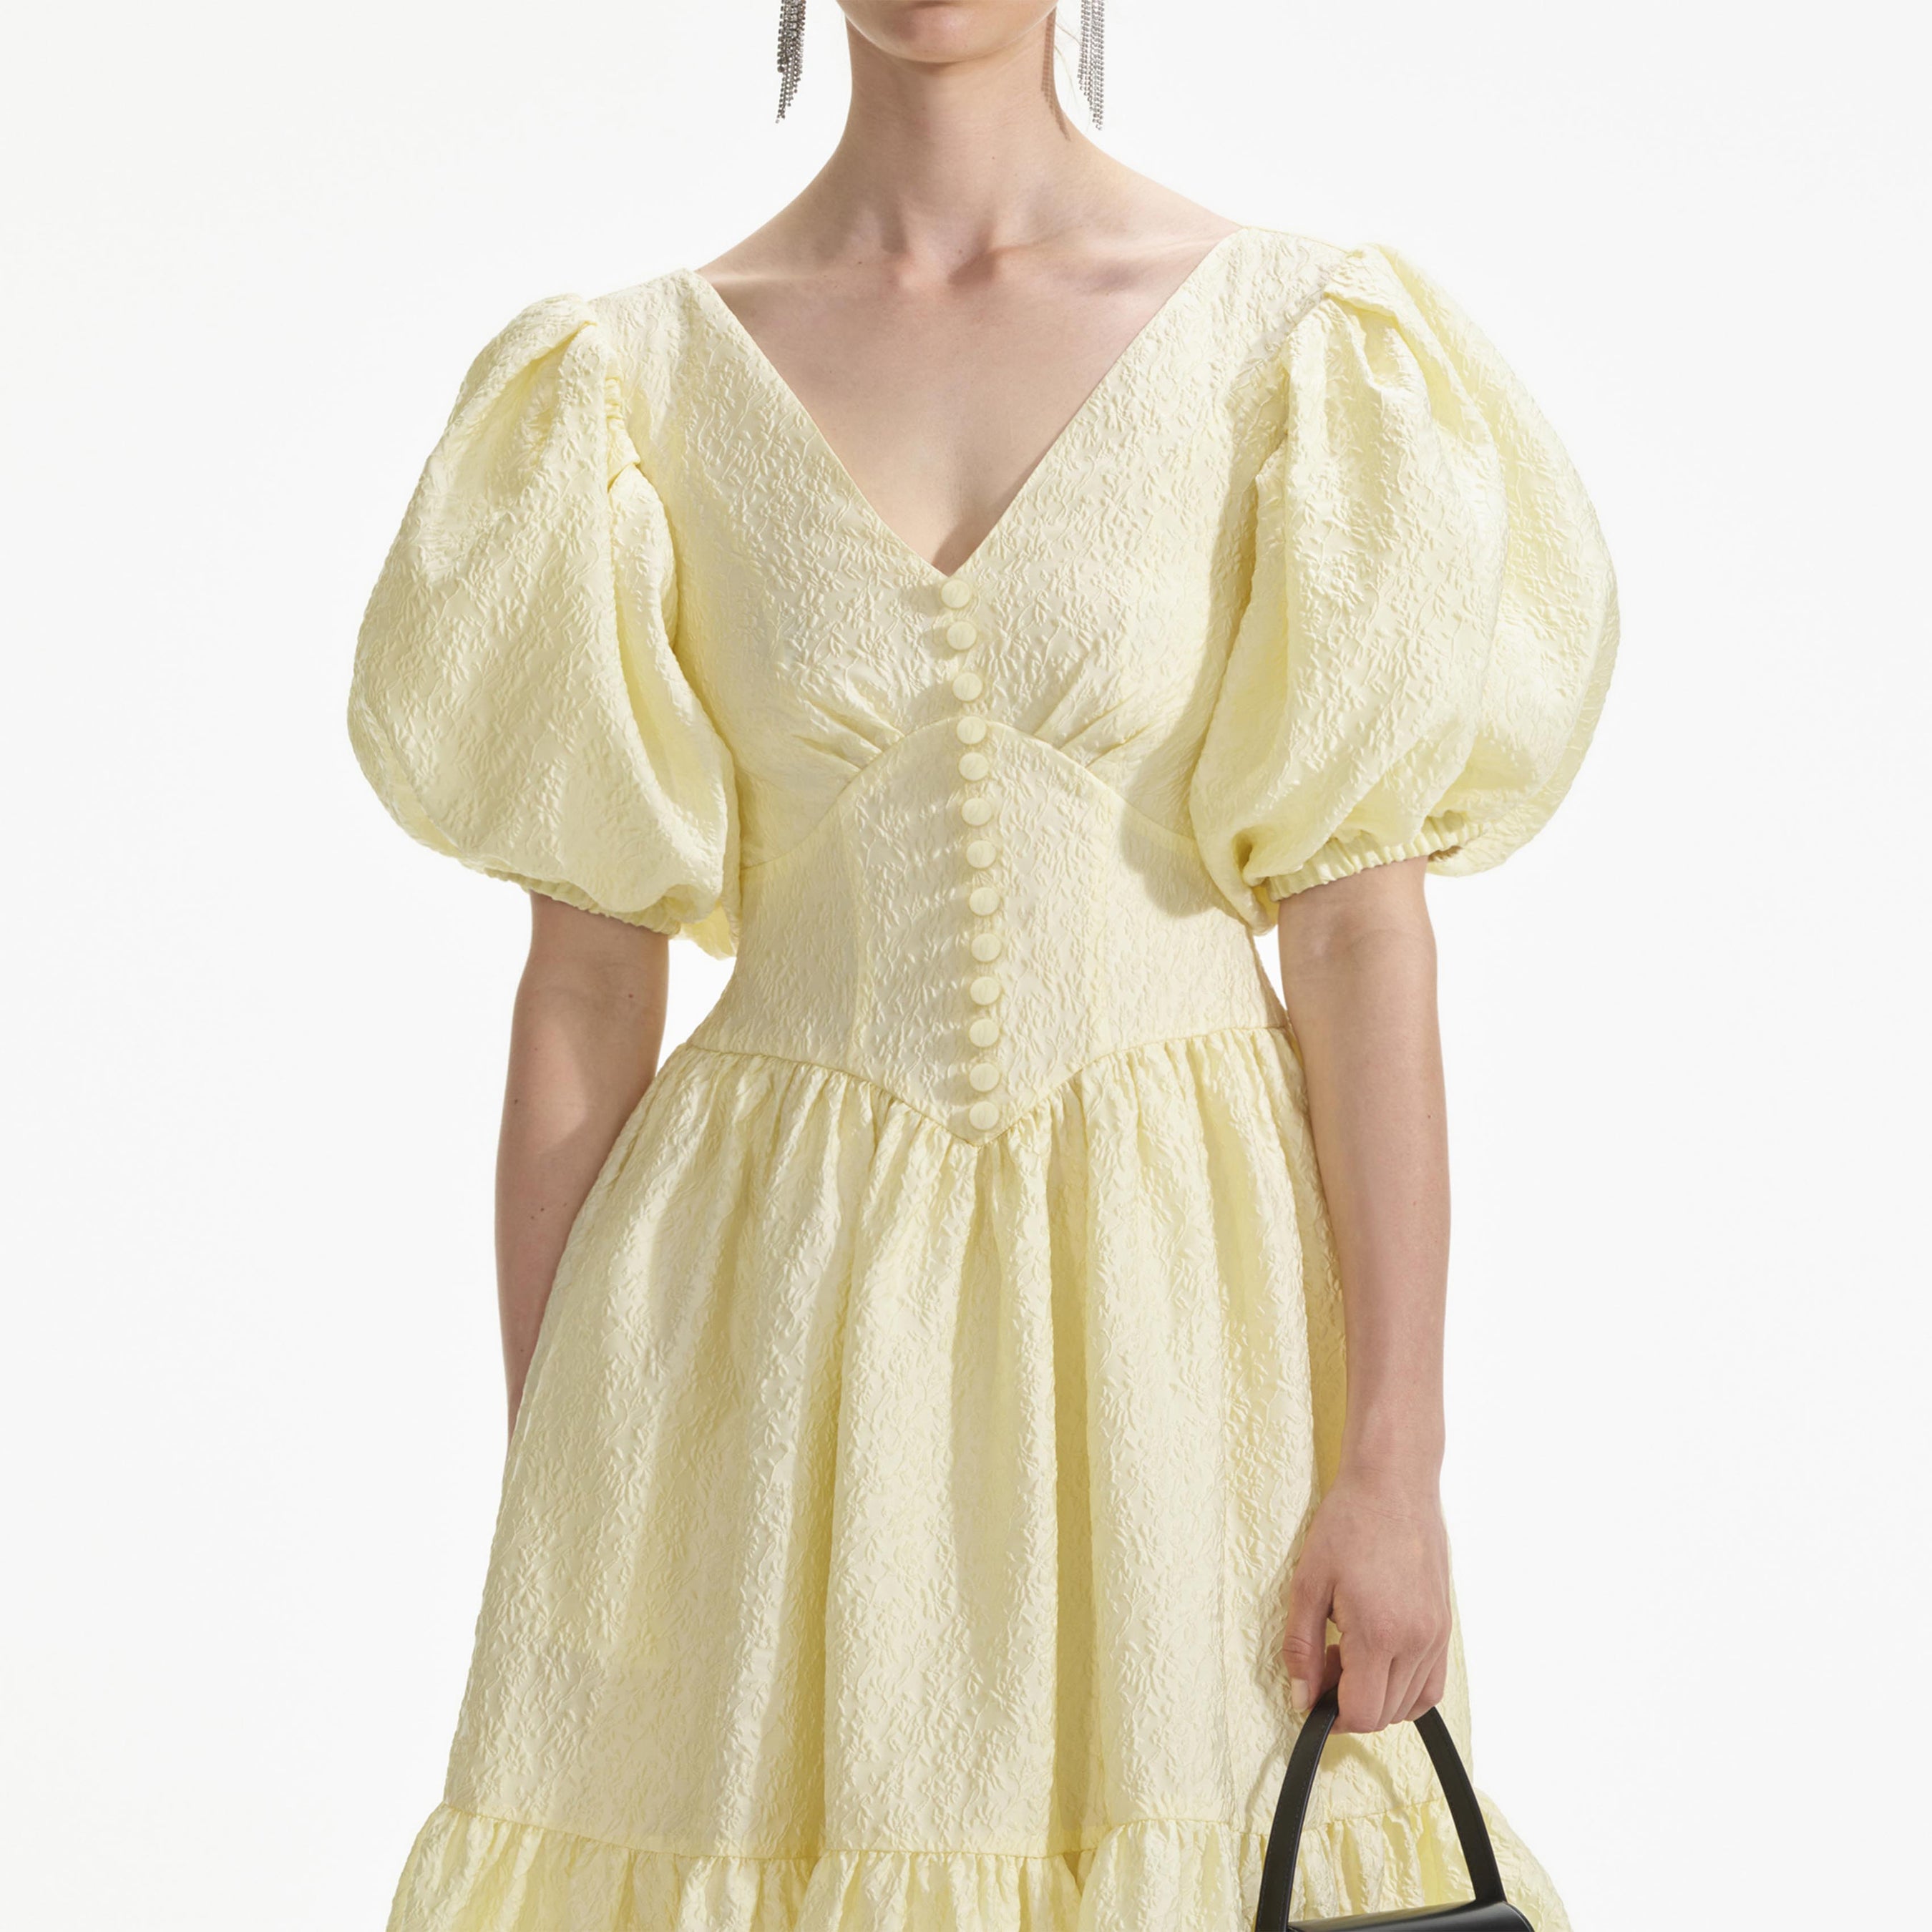 Yellow Jacquard Midi Dress